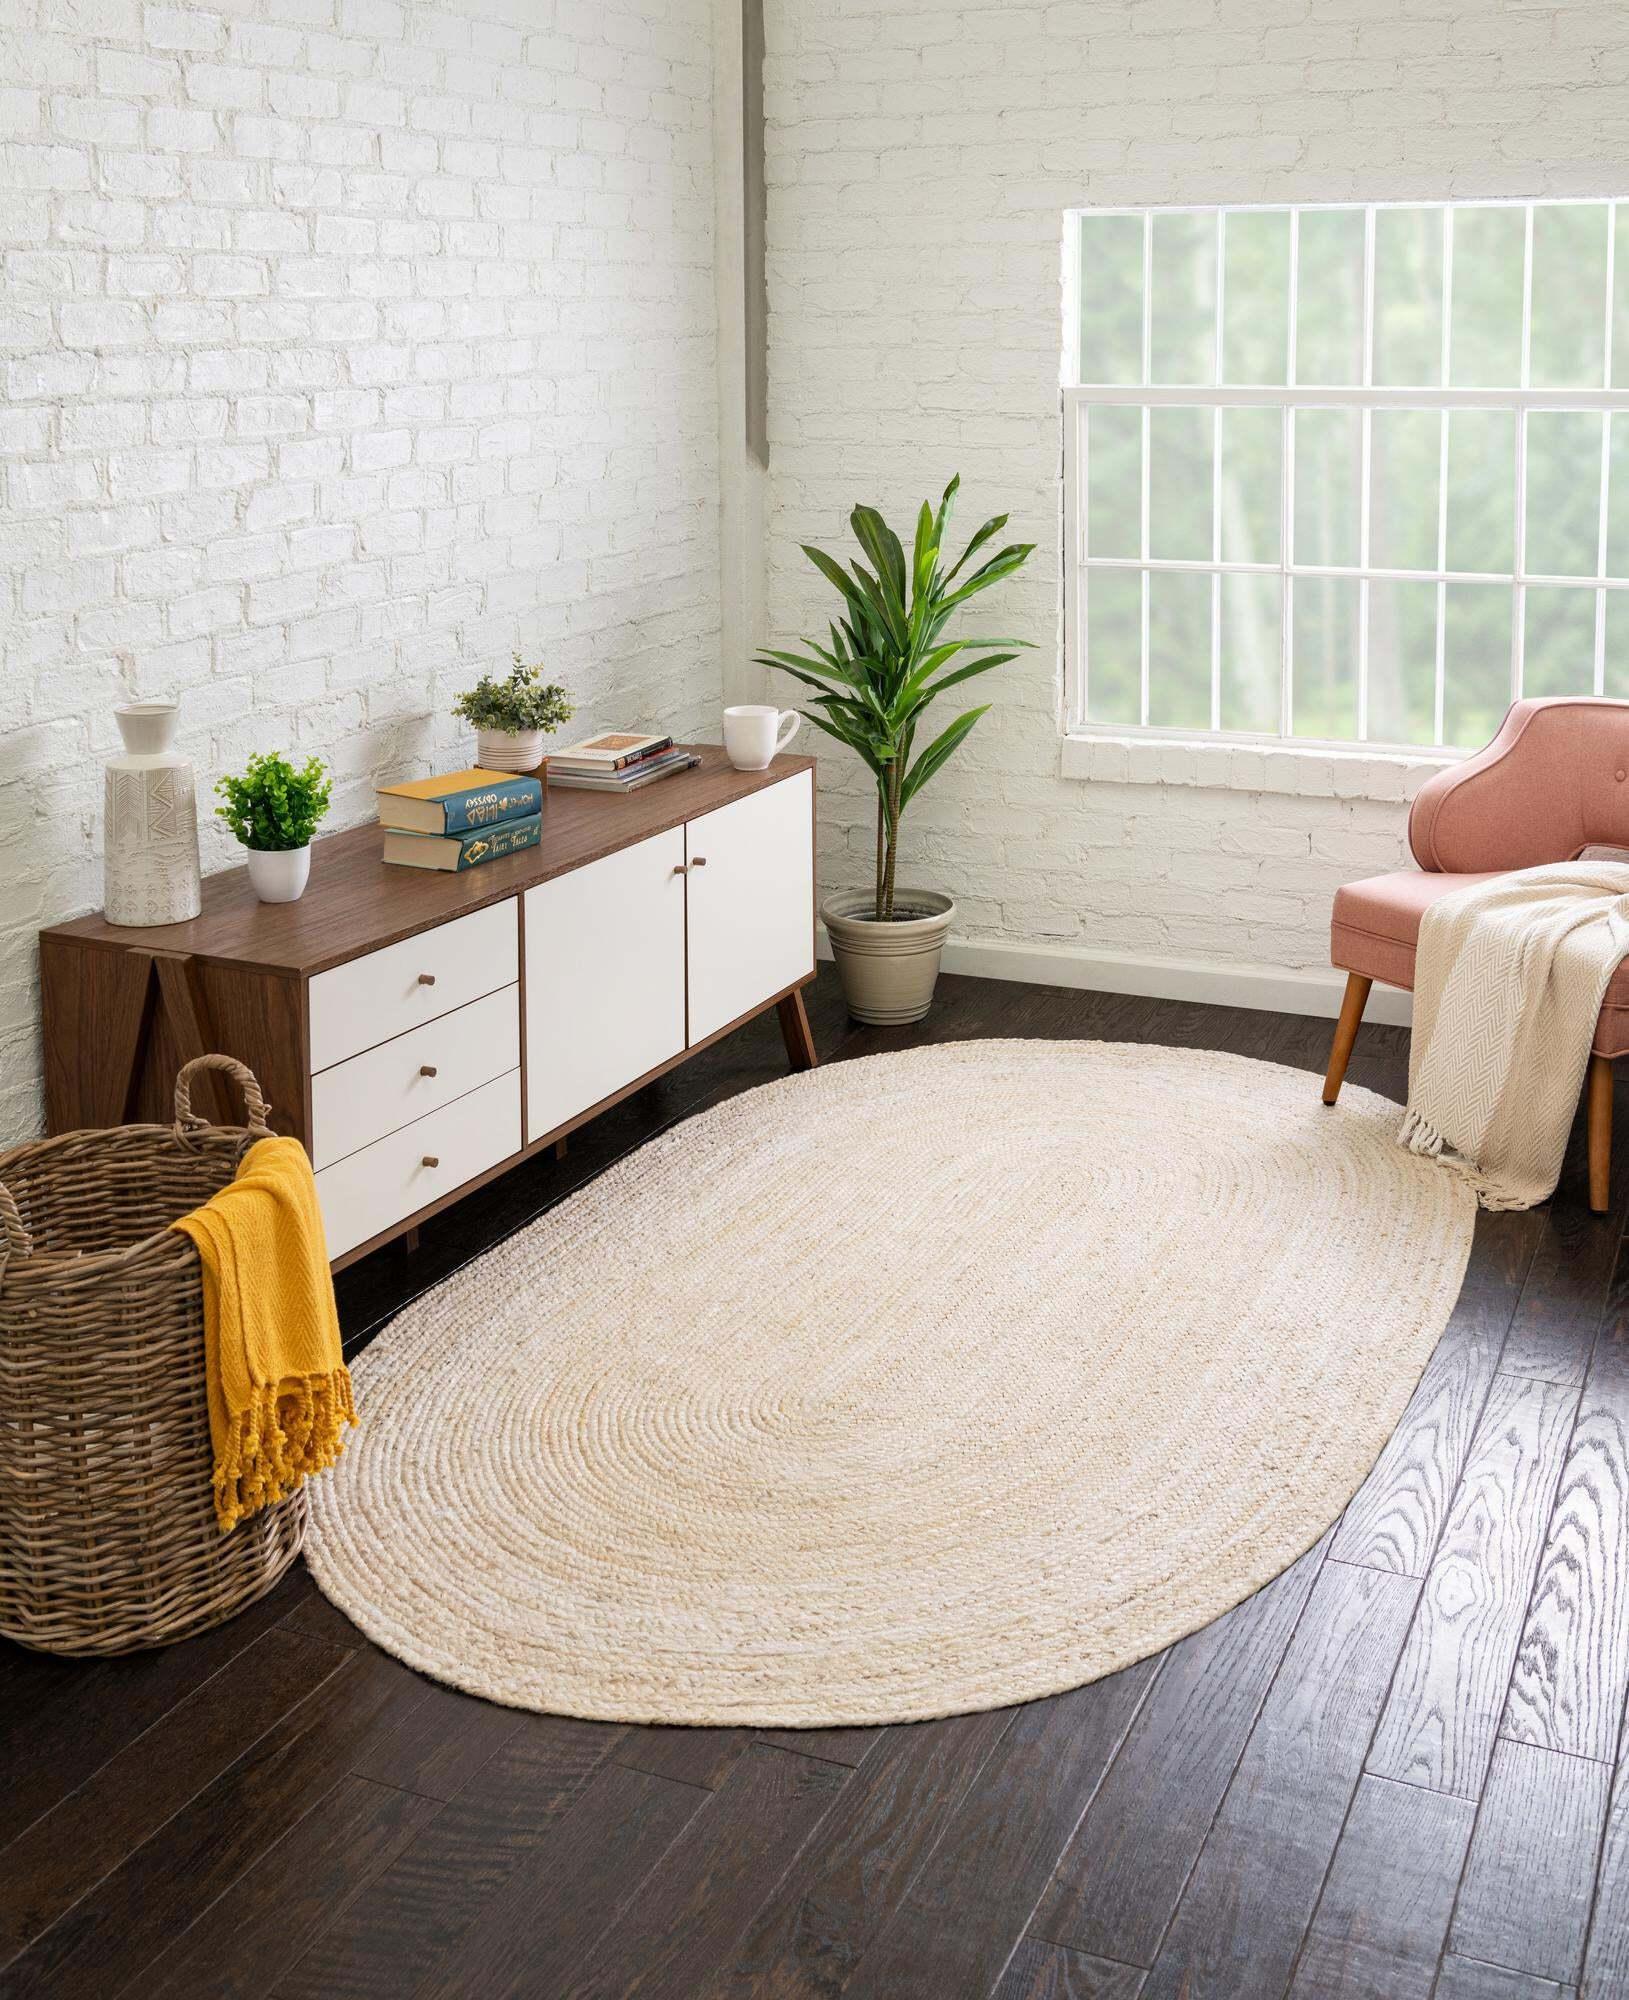 Living Room Beige Carpet Hand Braided Jute Rug Indian Bedroom Area